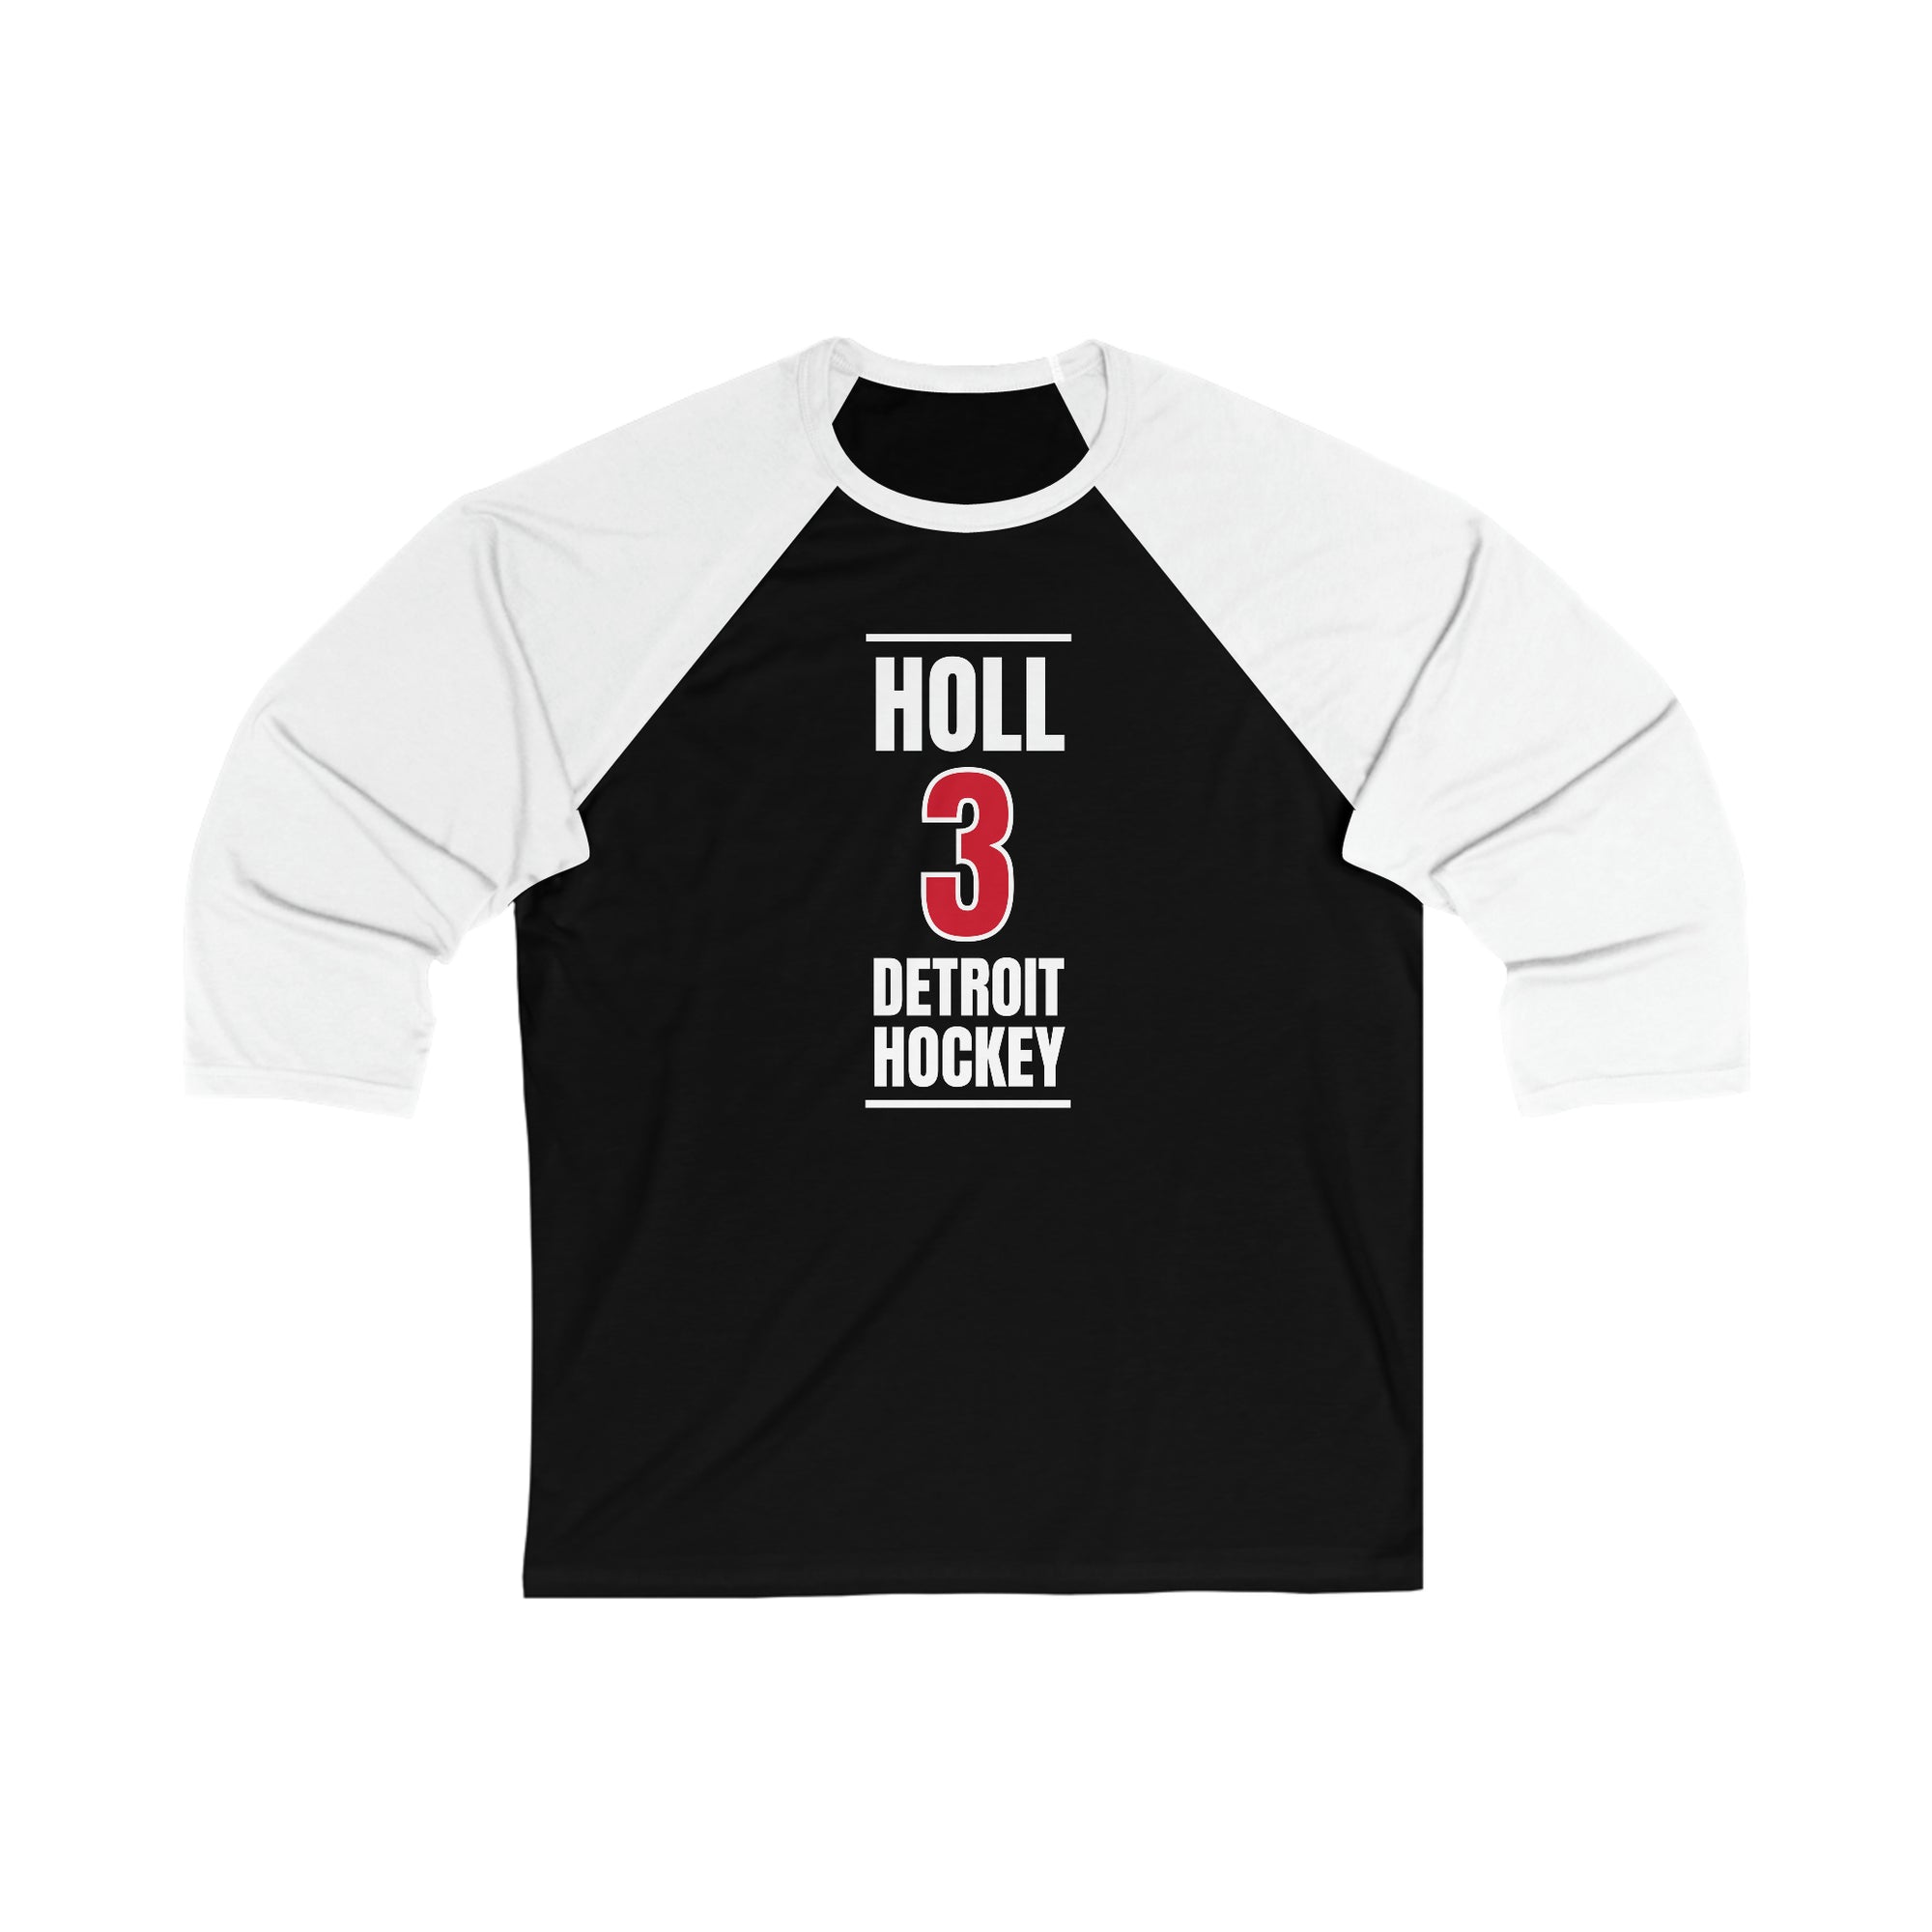 Holl 3 Detroit Hockey Red Vertical Design Unisex Tri-Blend 3/4 Sleeve Raglan Baseball Shirt